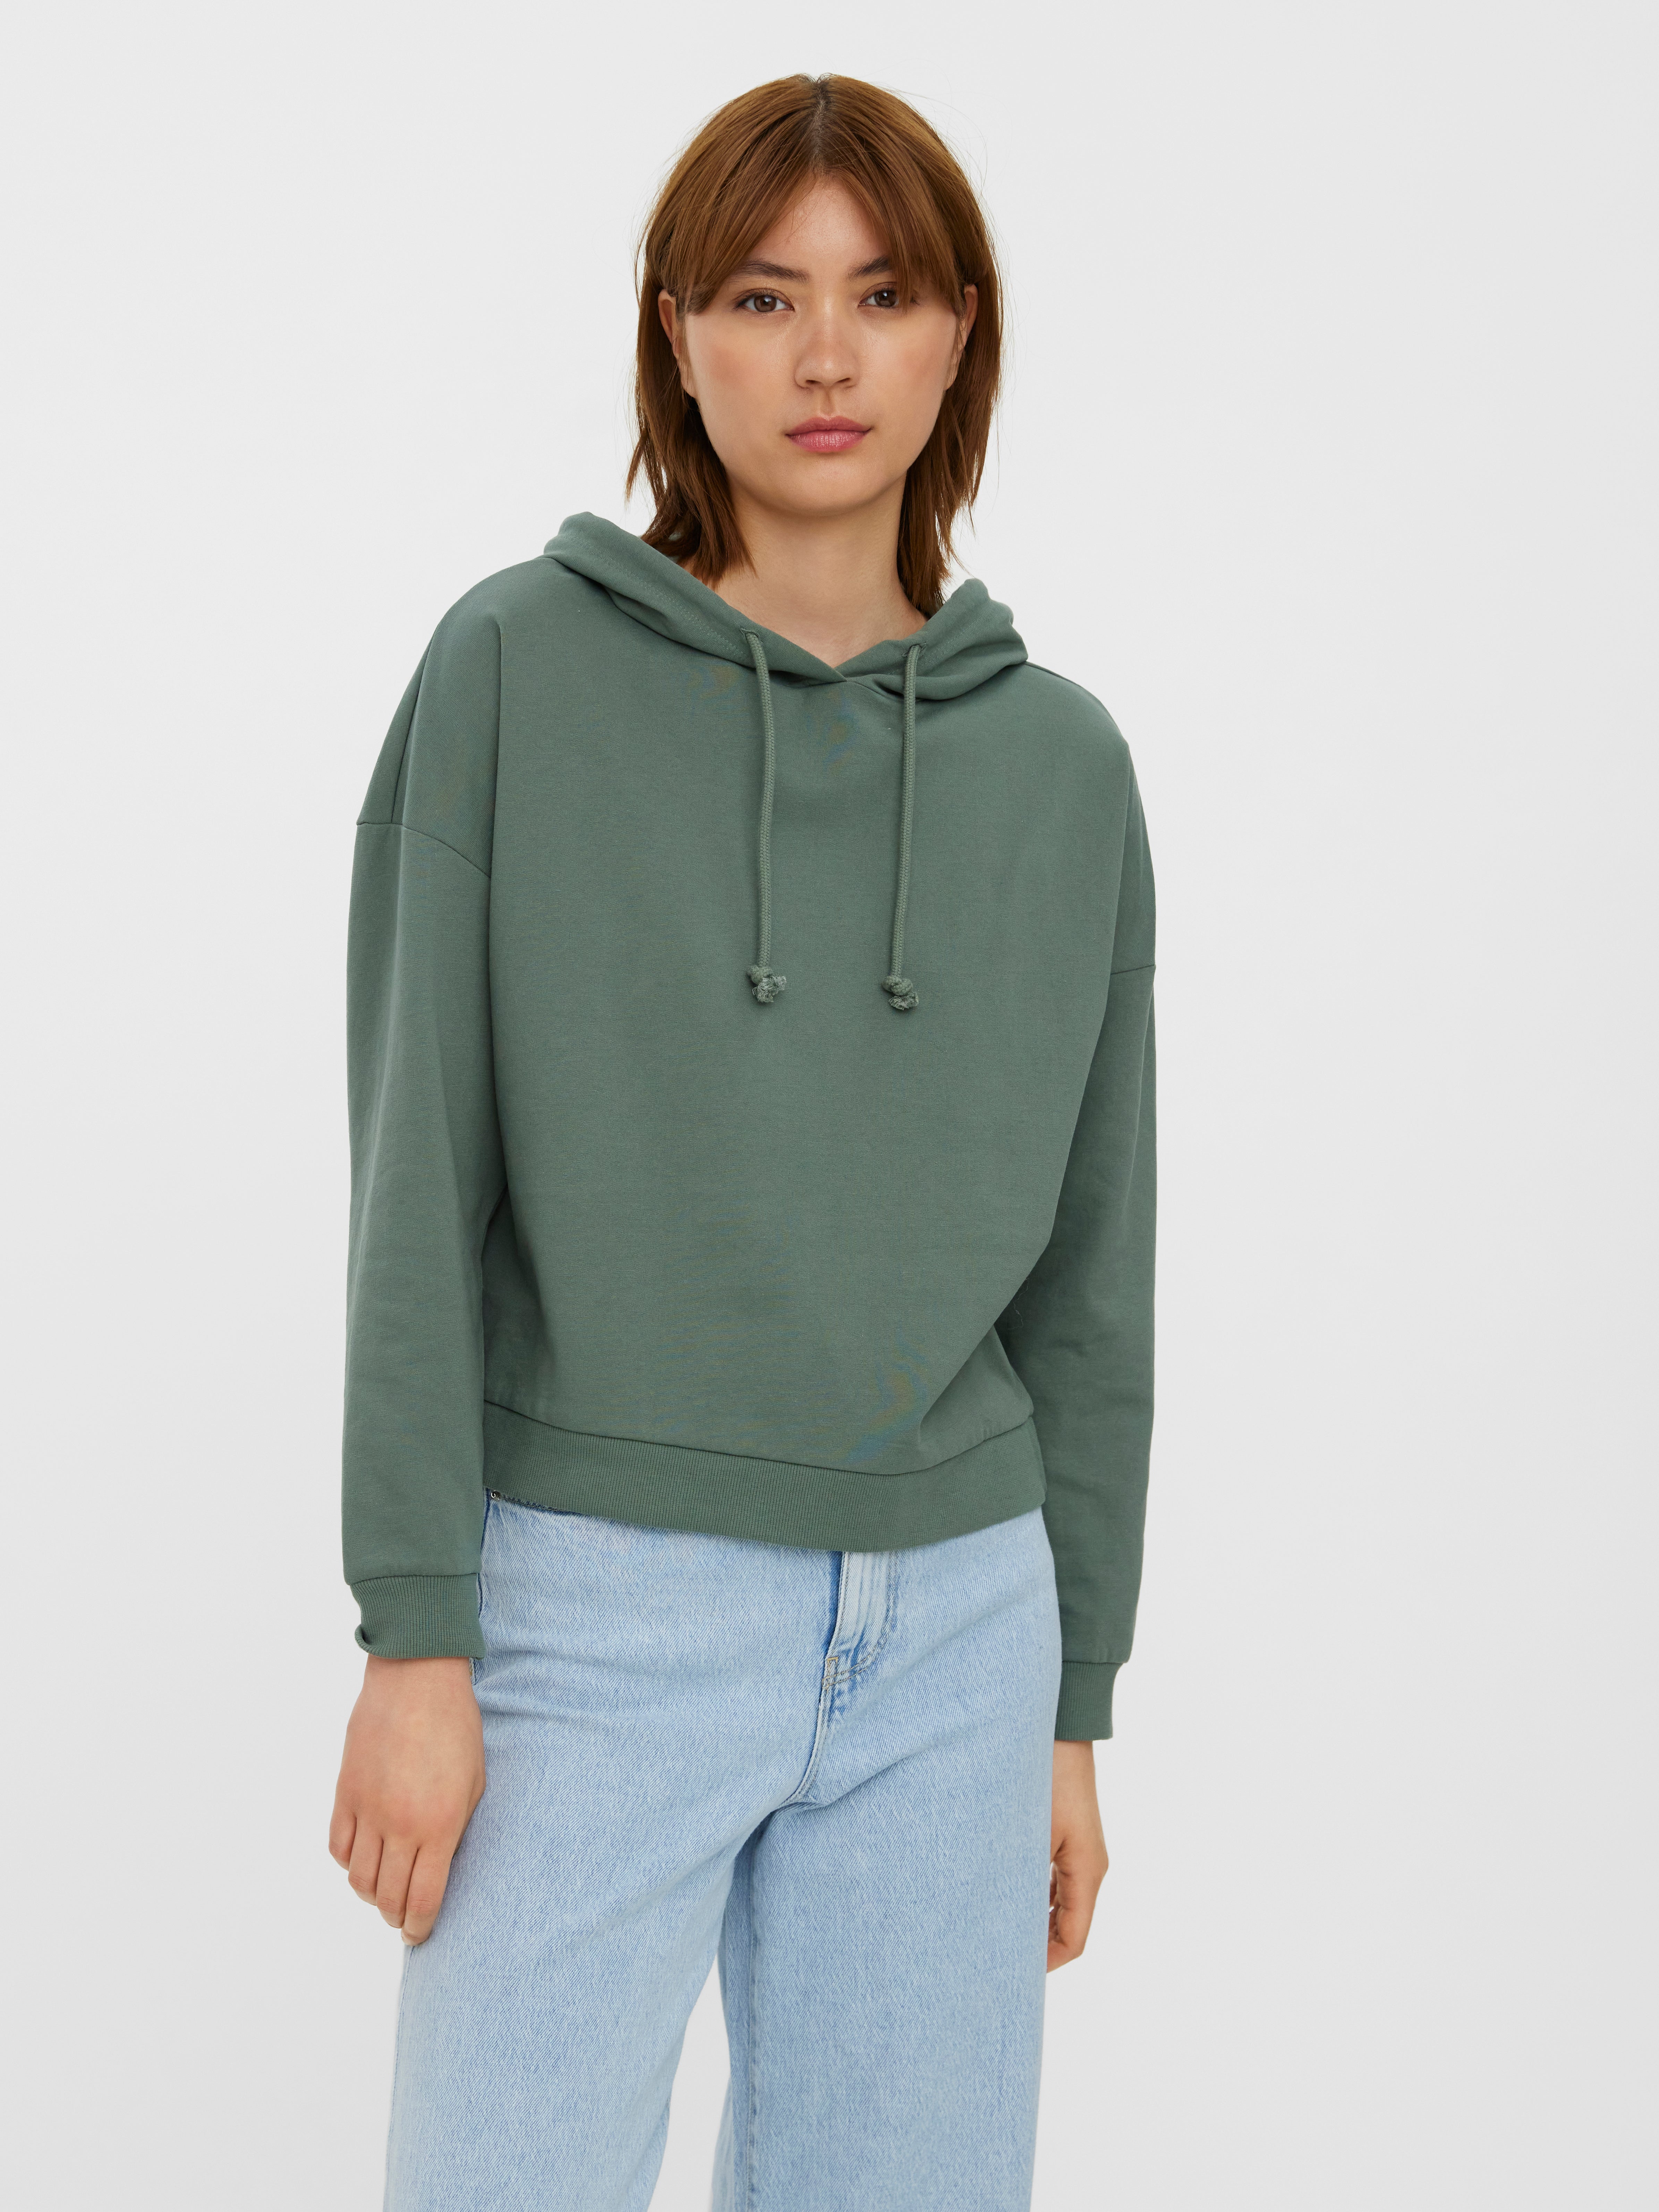 Intimissimi Pullover DAMEN Pullovers & Sweatshirts Ohne Kapuze Rabatt 99 % Grau M 